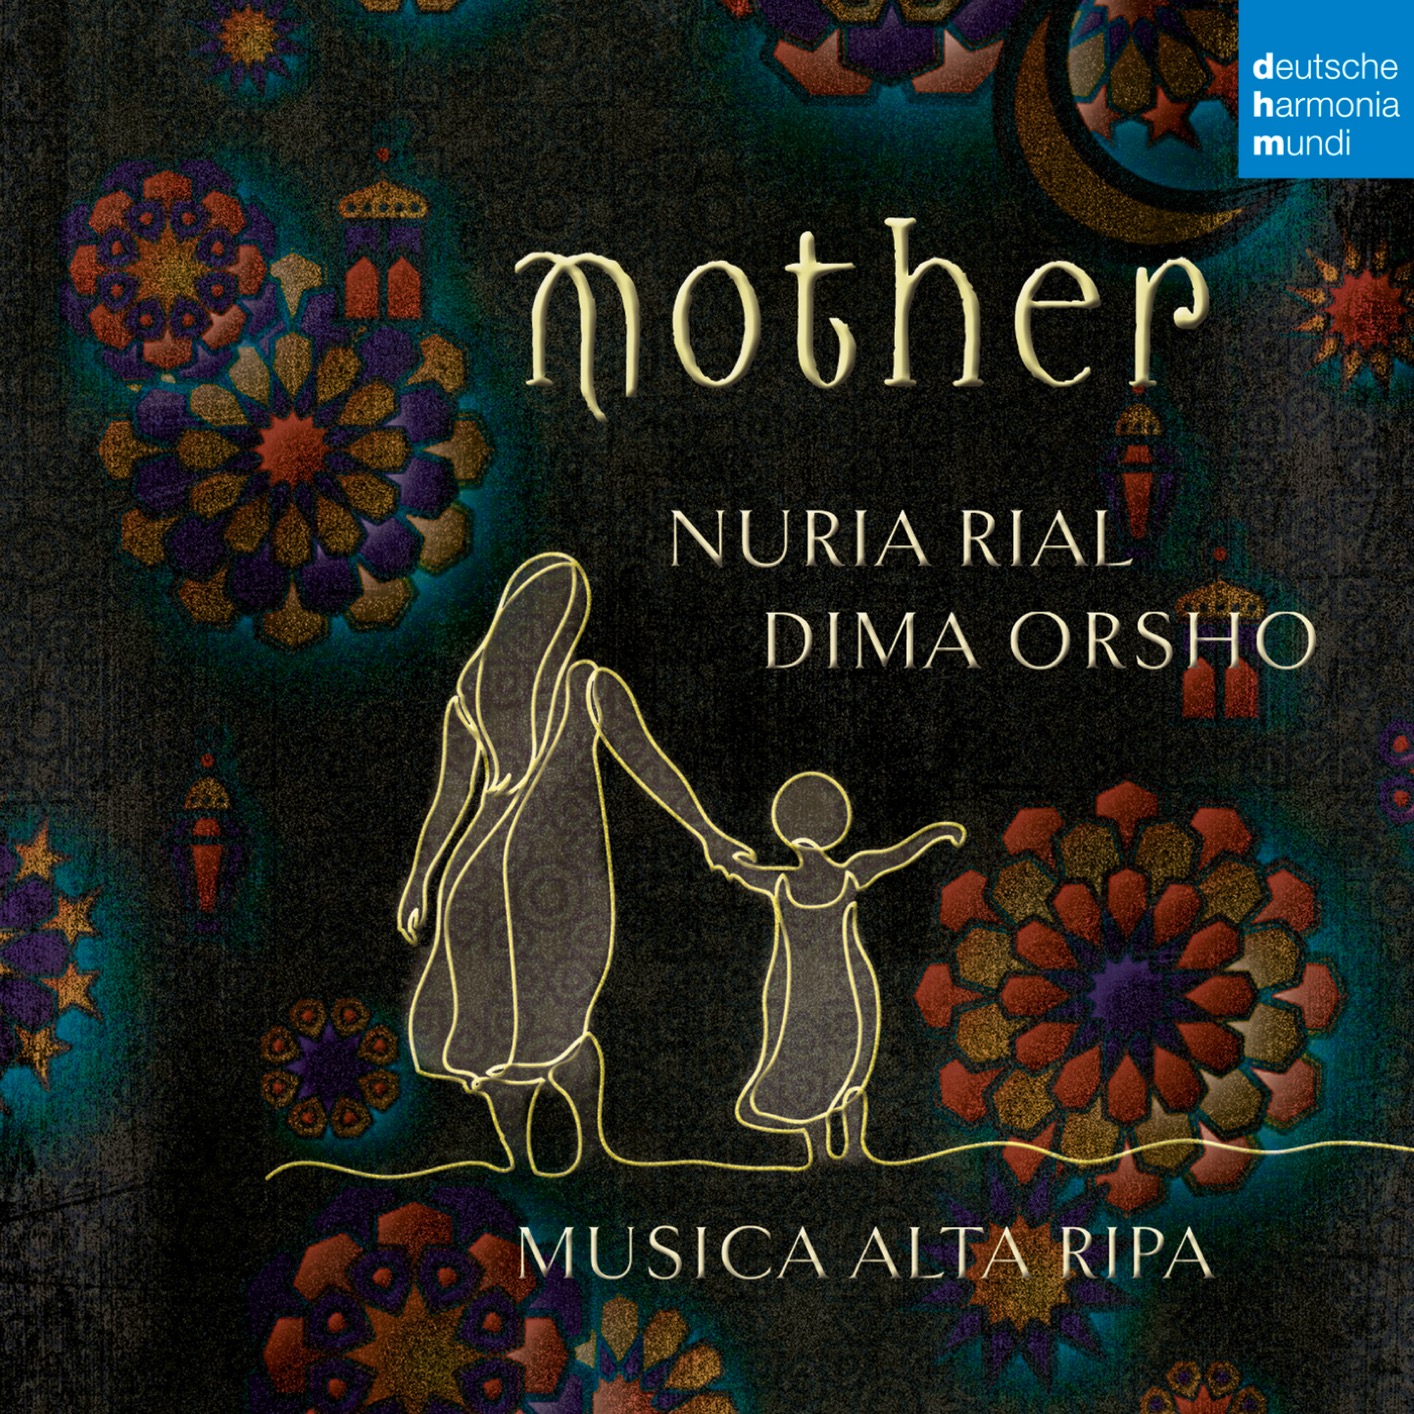 Nuria Rial & Dima Orsho & Musica Alta Ripa – Mother (Live) (2019) [FLAC 24bit/96kHz]